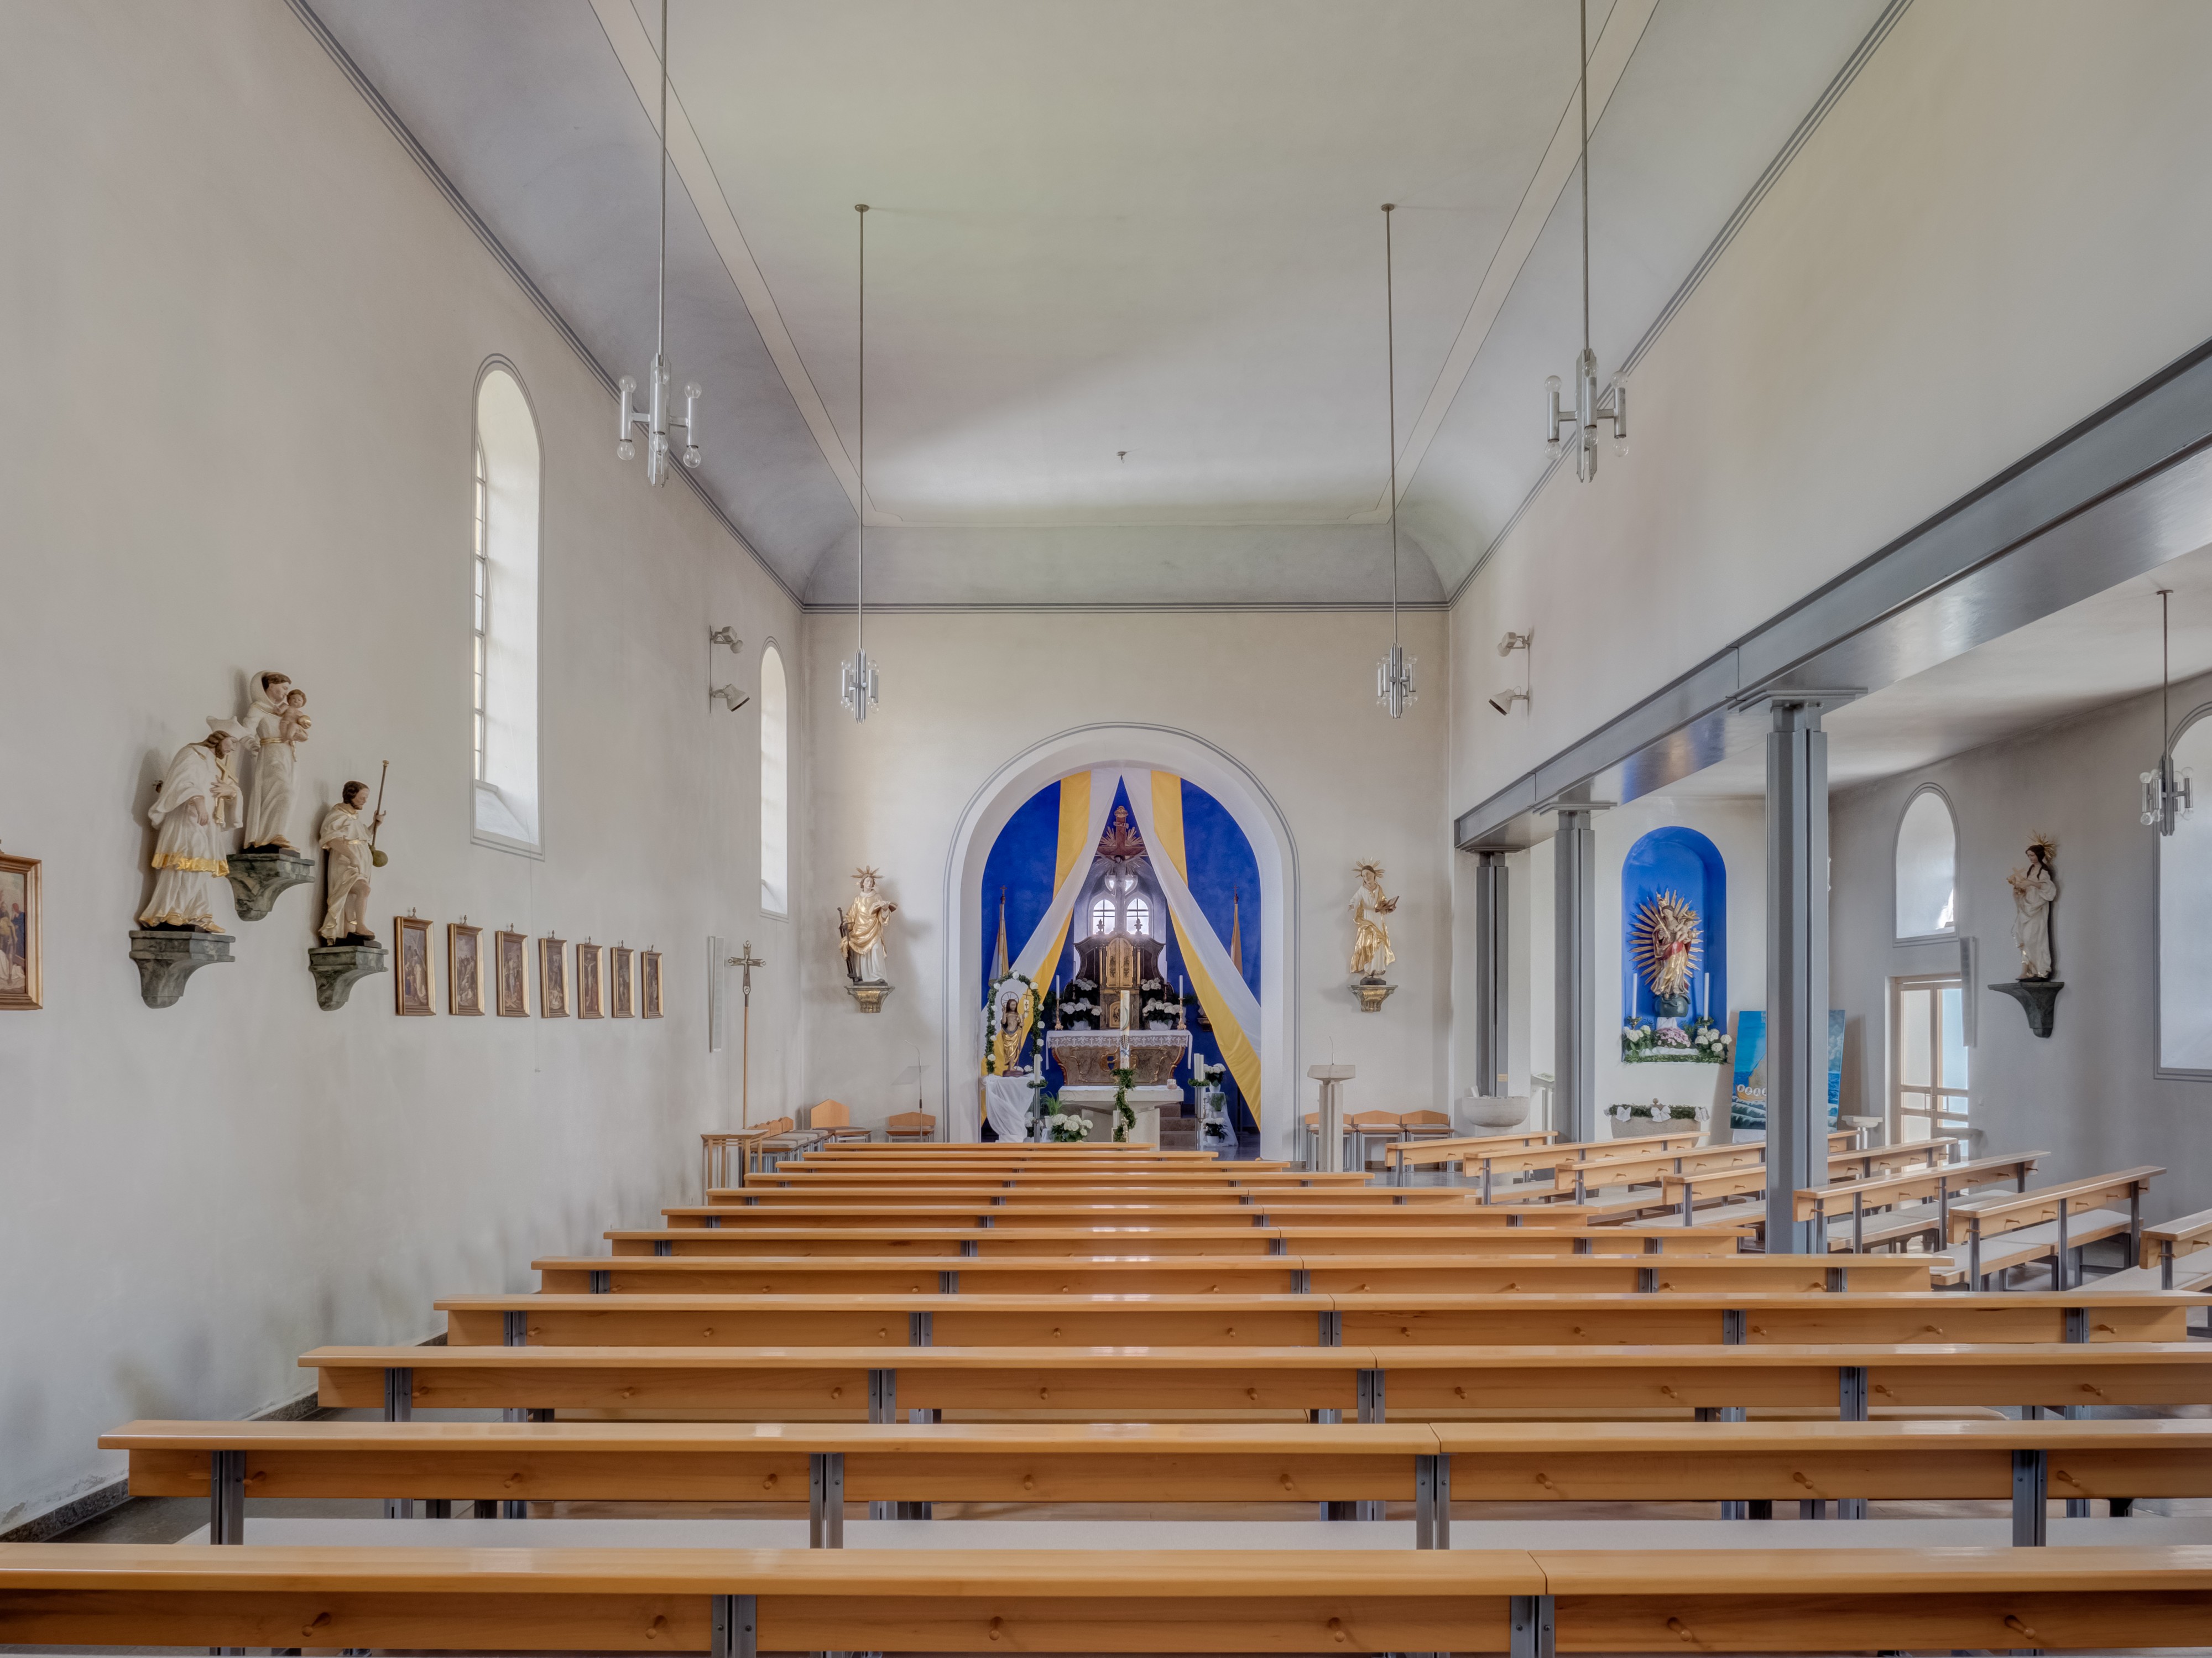 Aisch Pfarrkirche St. Laurentius Interior 17RM1009 -HDR